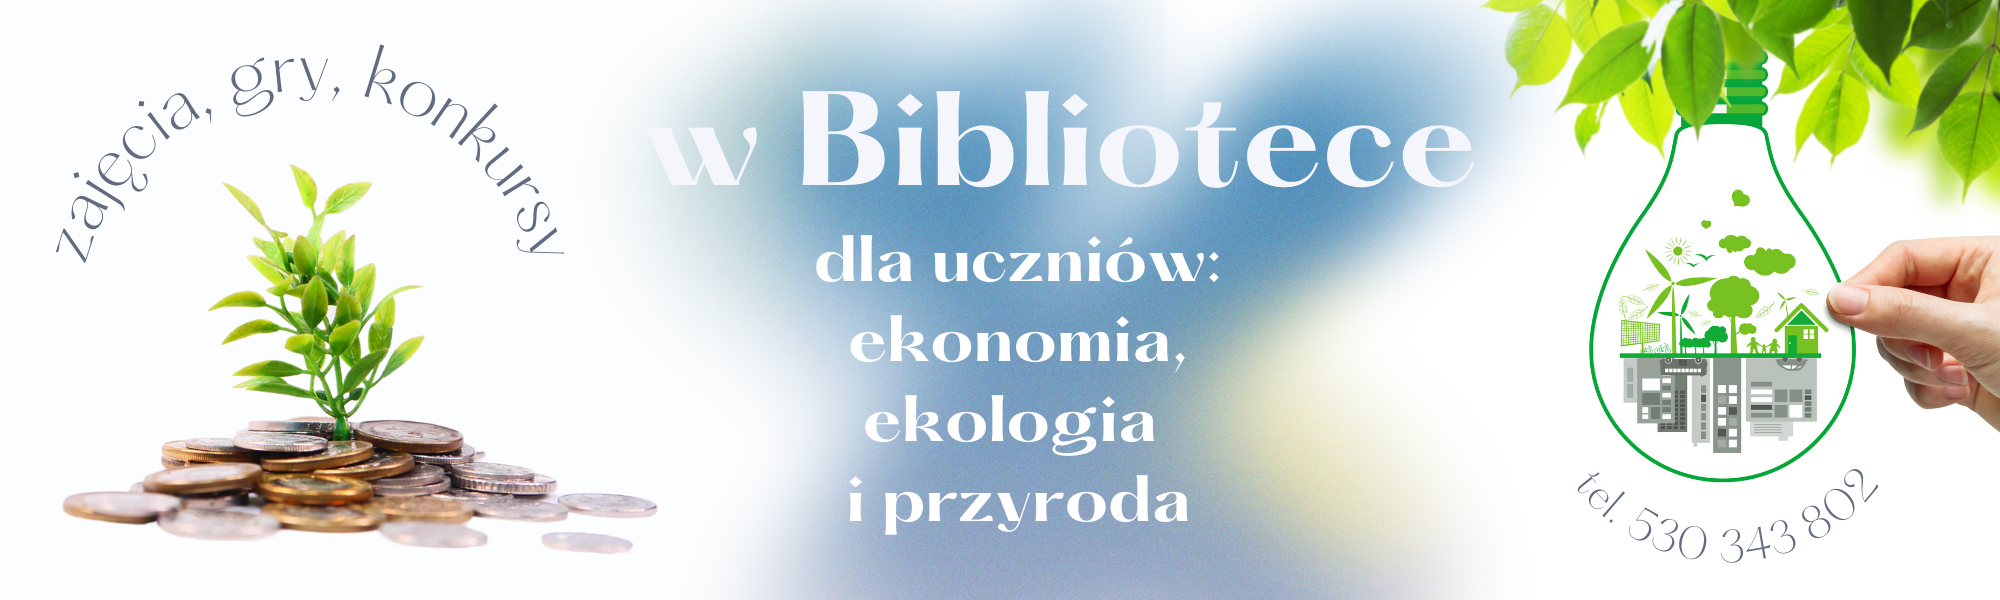 slider-Ekologia-ekonomia_w_bibliotece.png